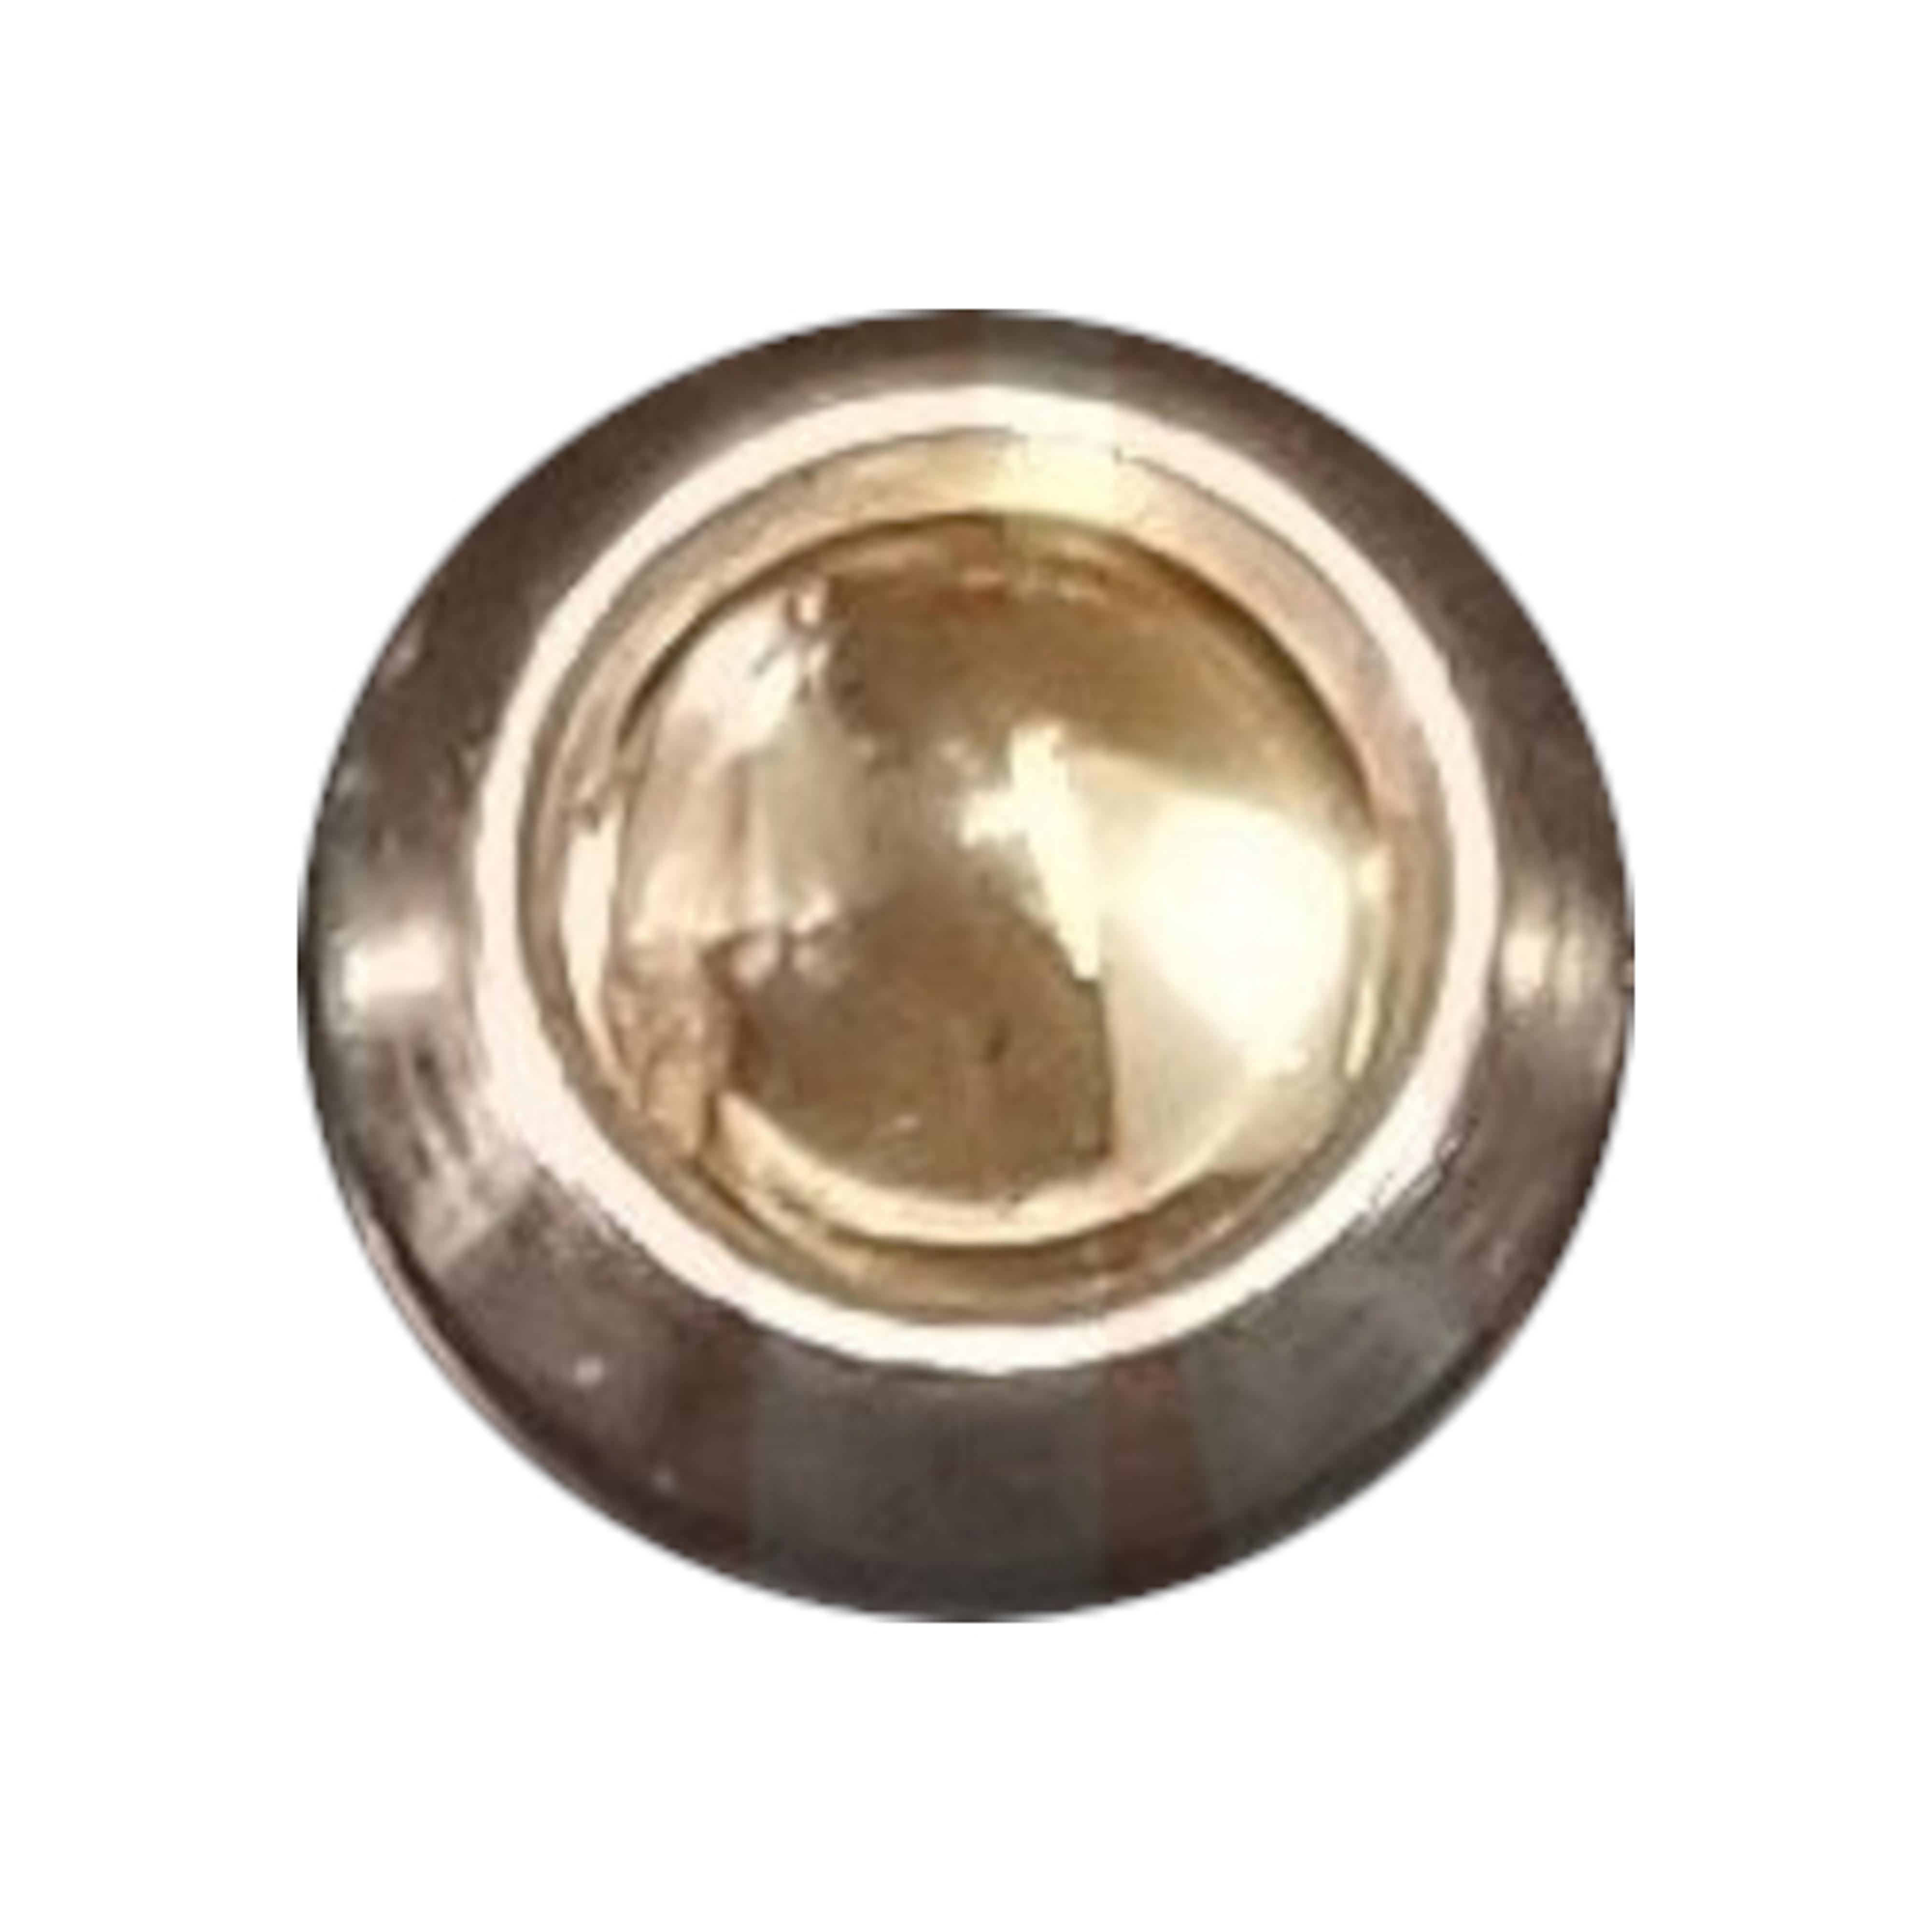 SIMP 5mm Monoeye / Scope (Gold)